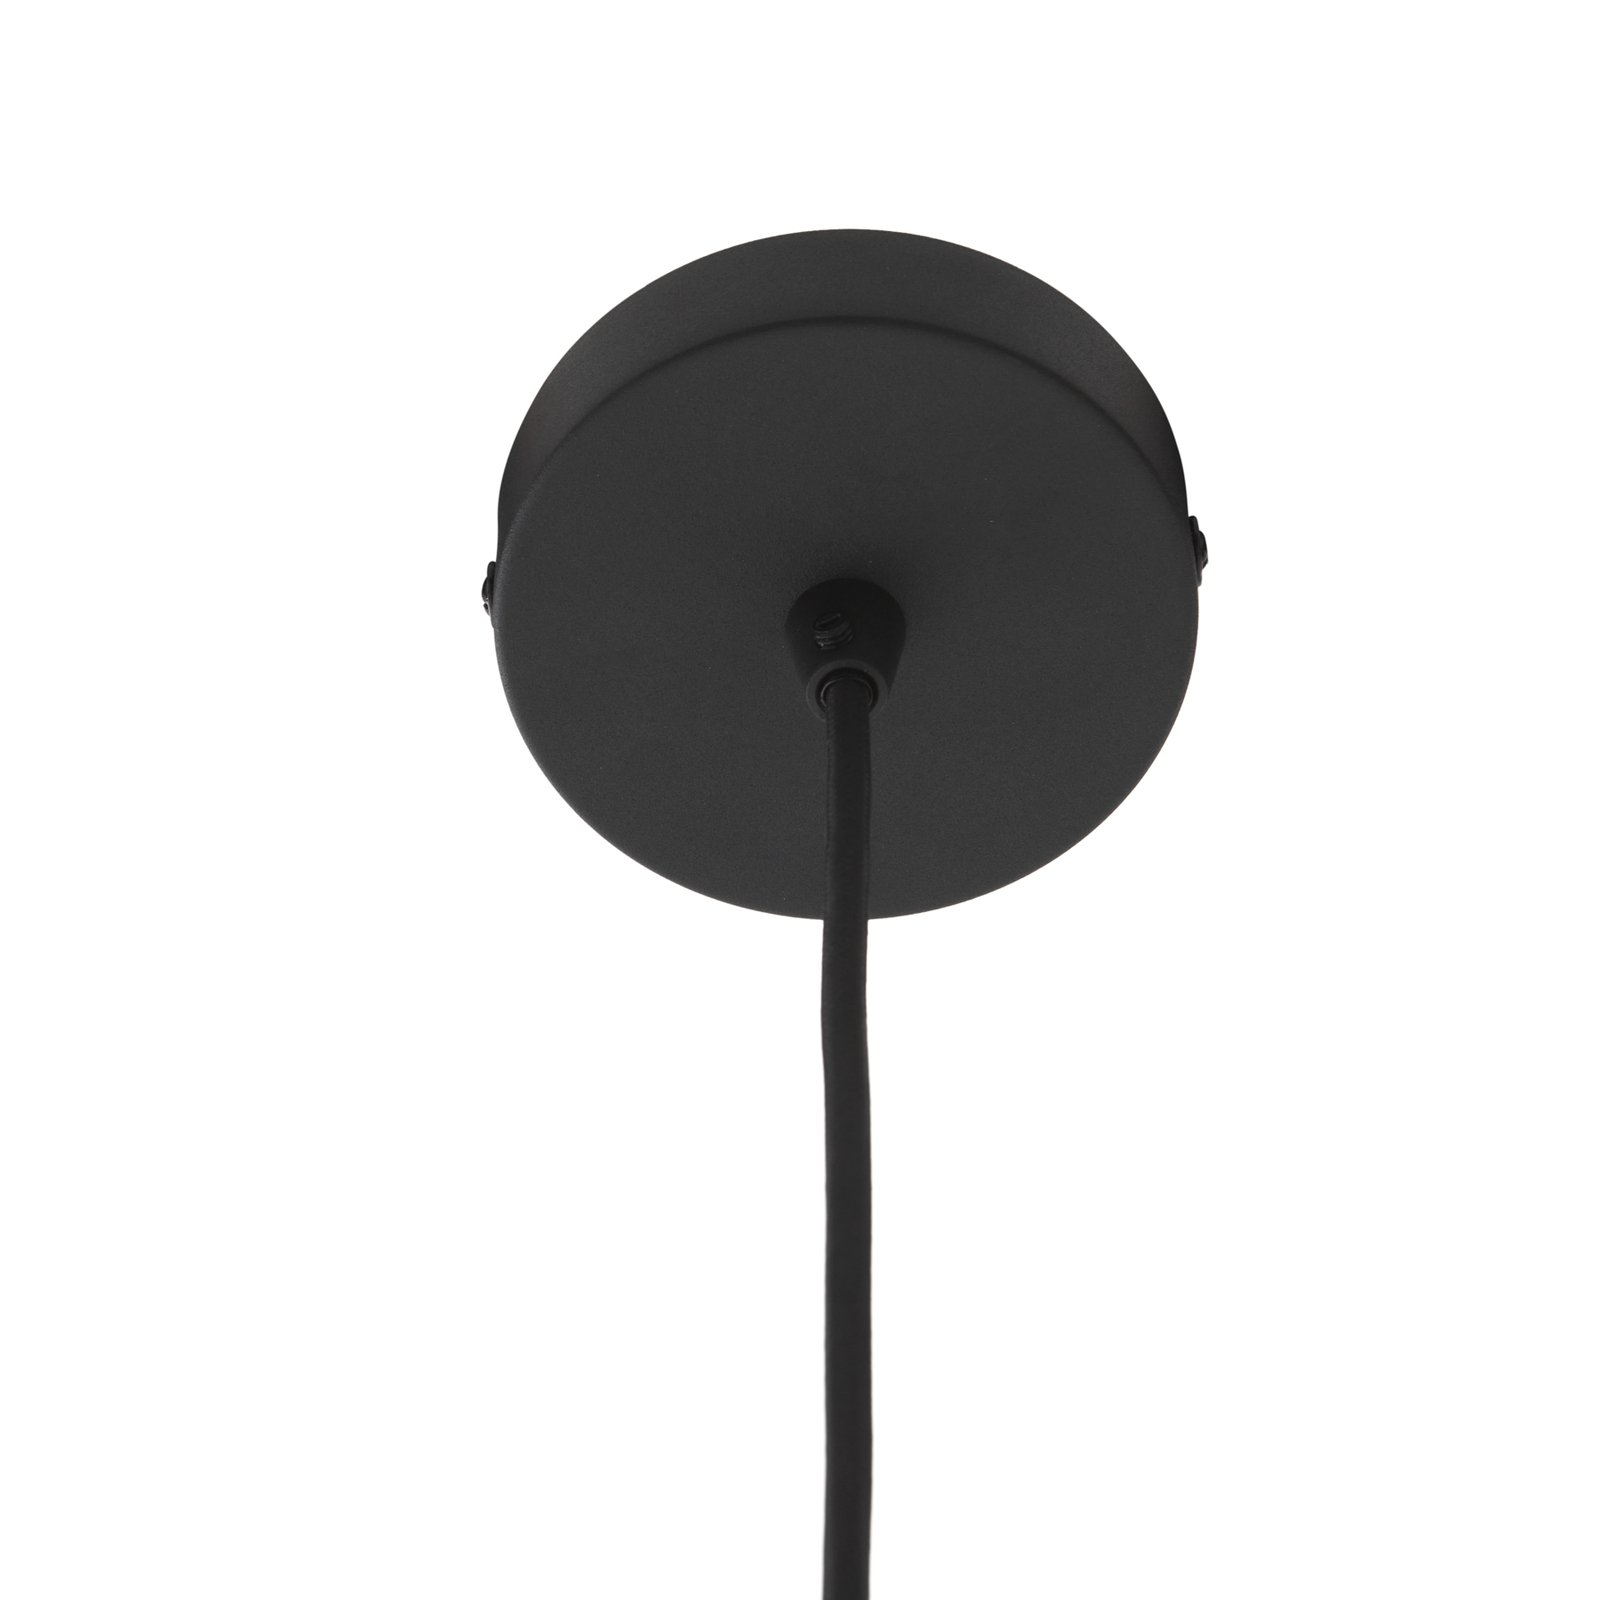 Lucande hanglamp Aeloria, zwart, Ø 25 cm, ijzer, E27